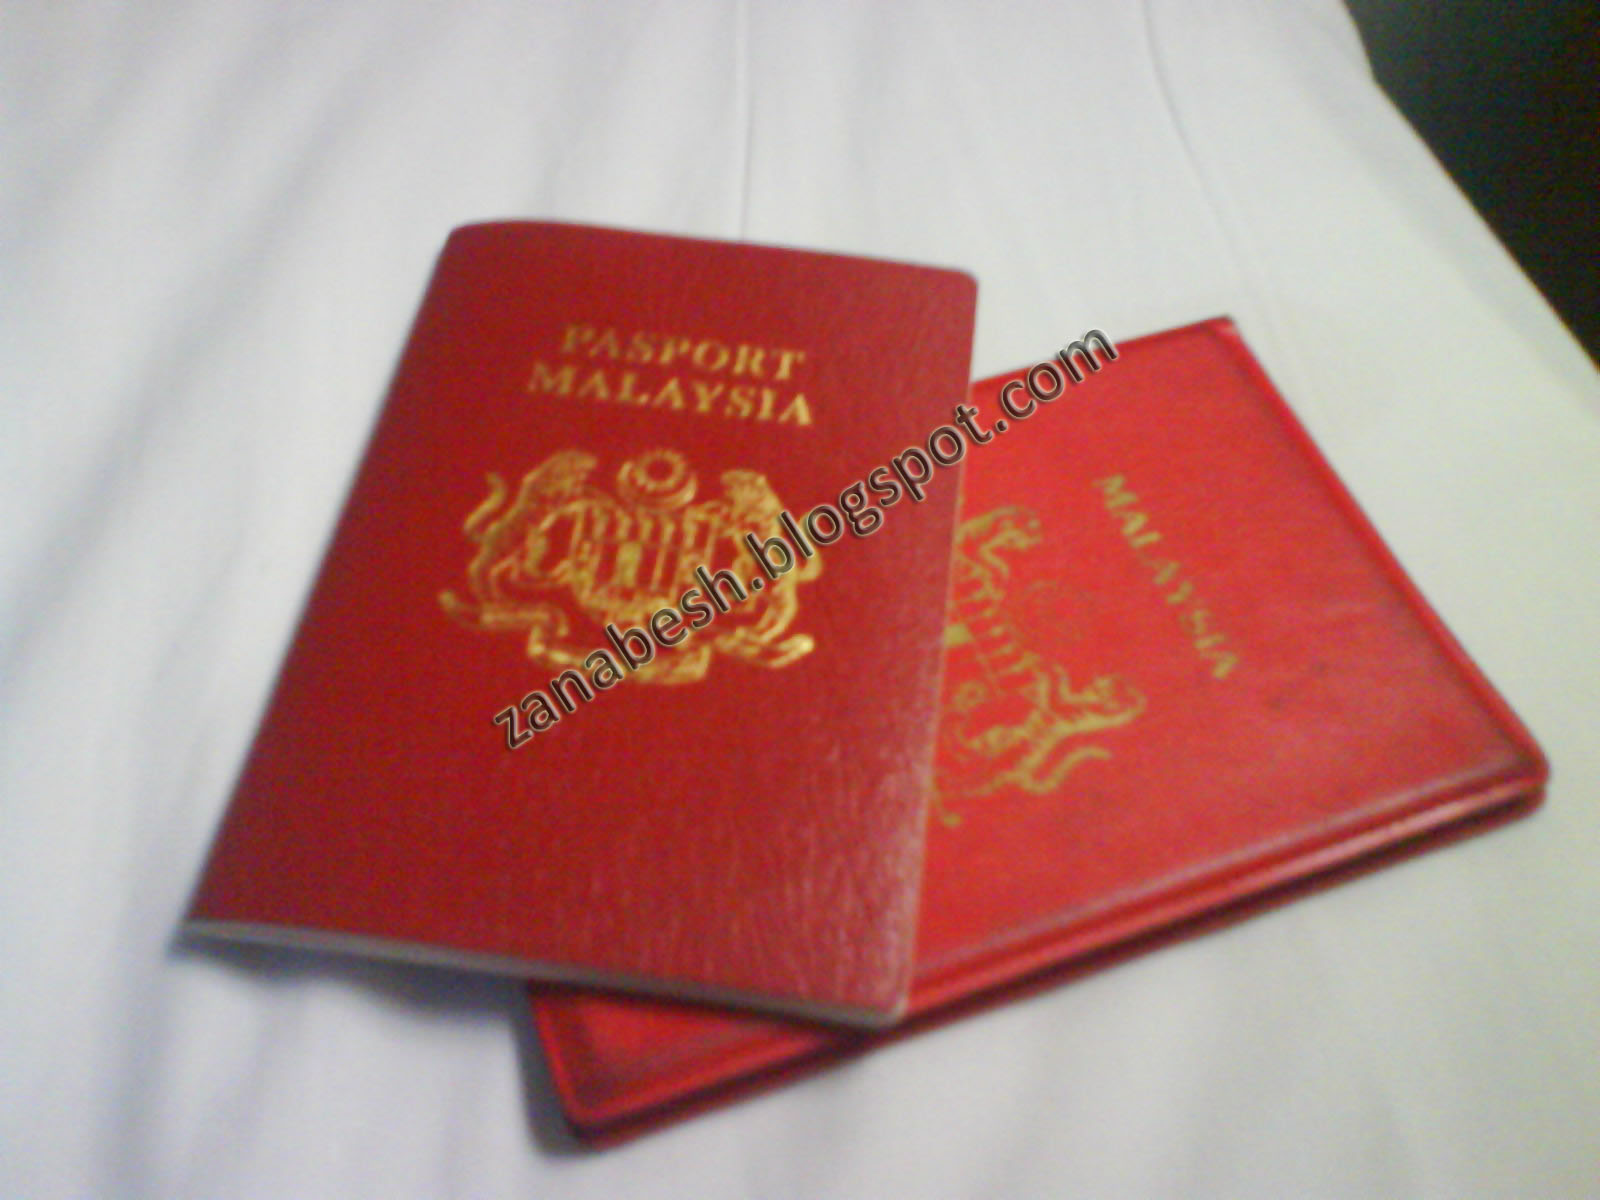 [pasport+blog.jpg]